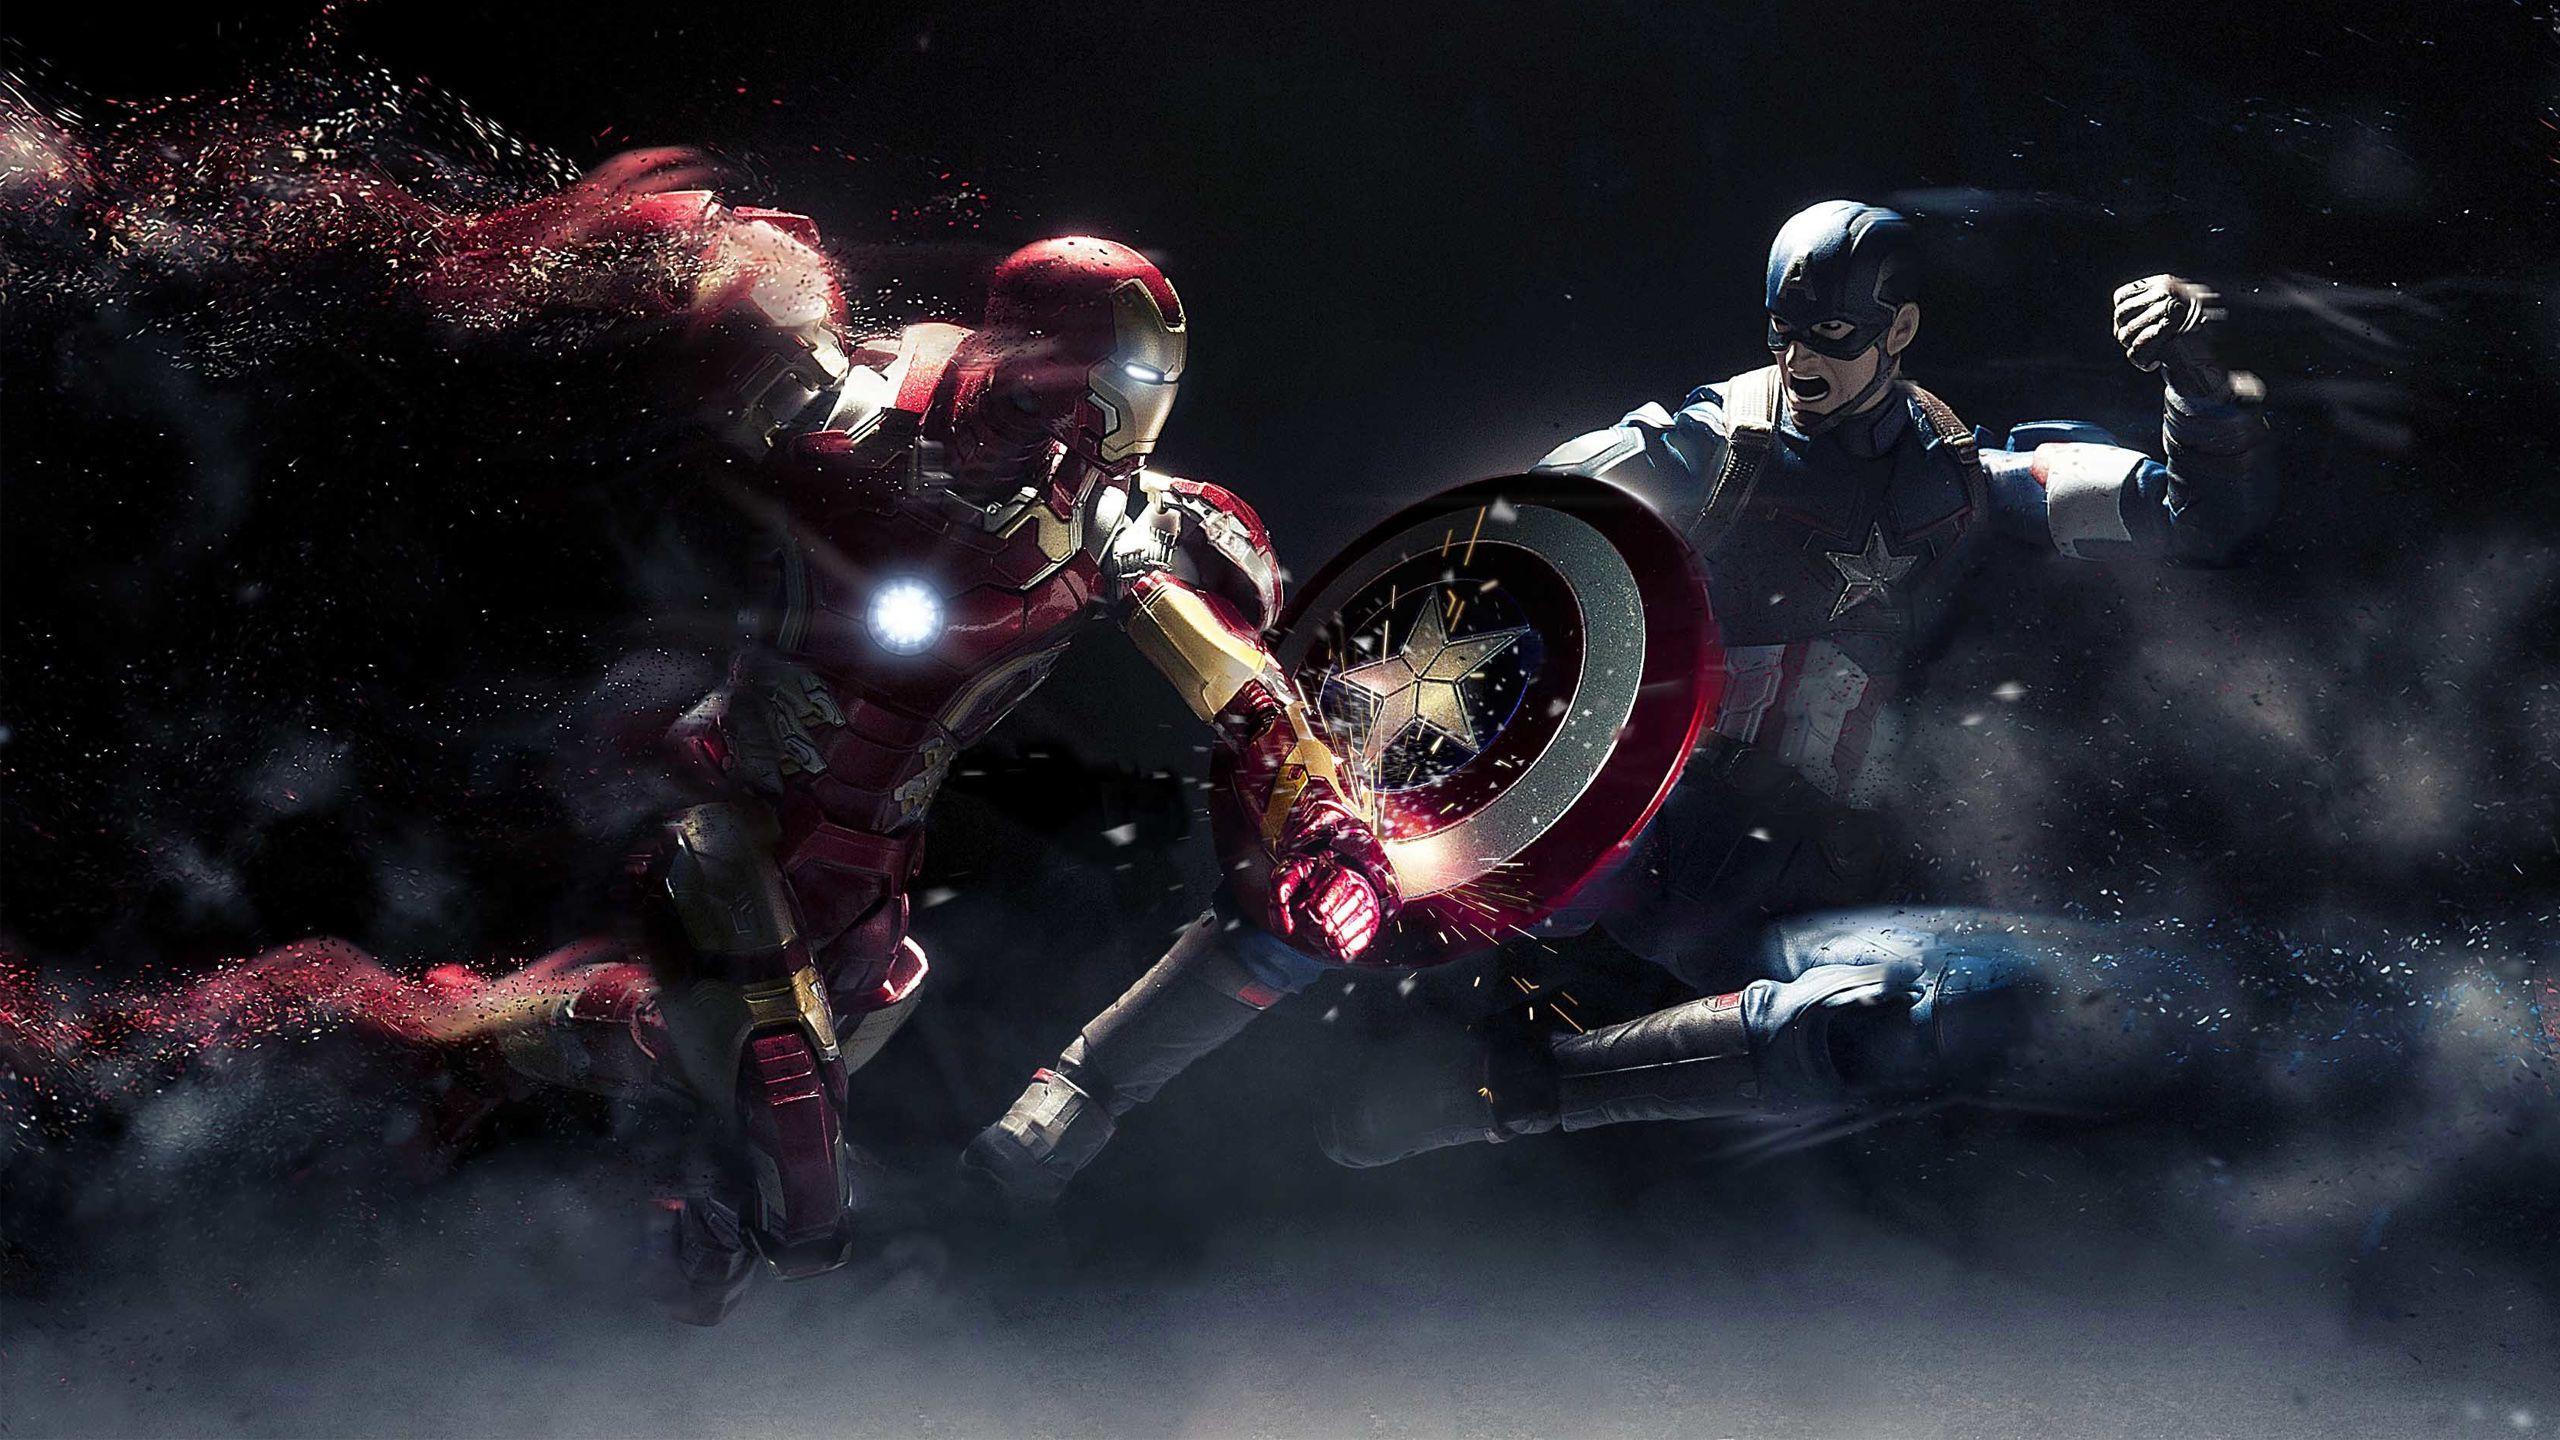 Captain America vs Iron Man HD Wallpaper. Thứ cần mua